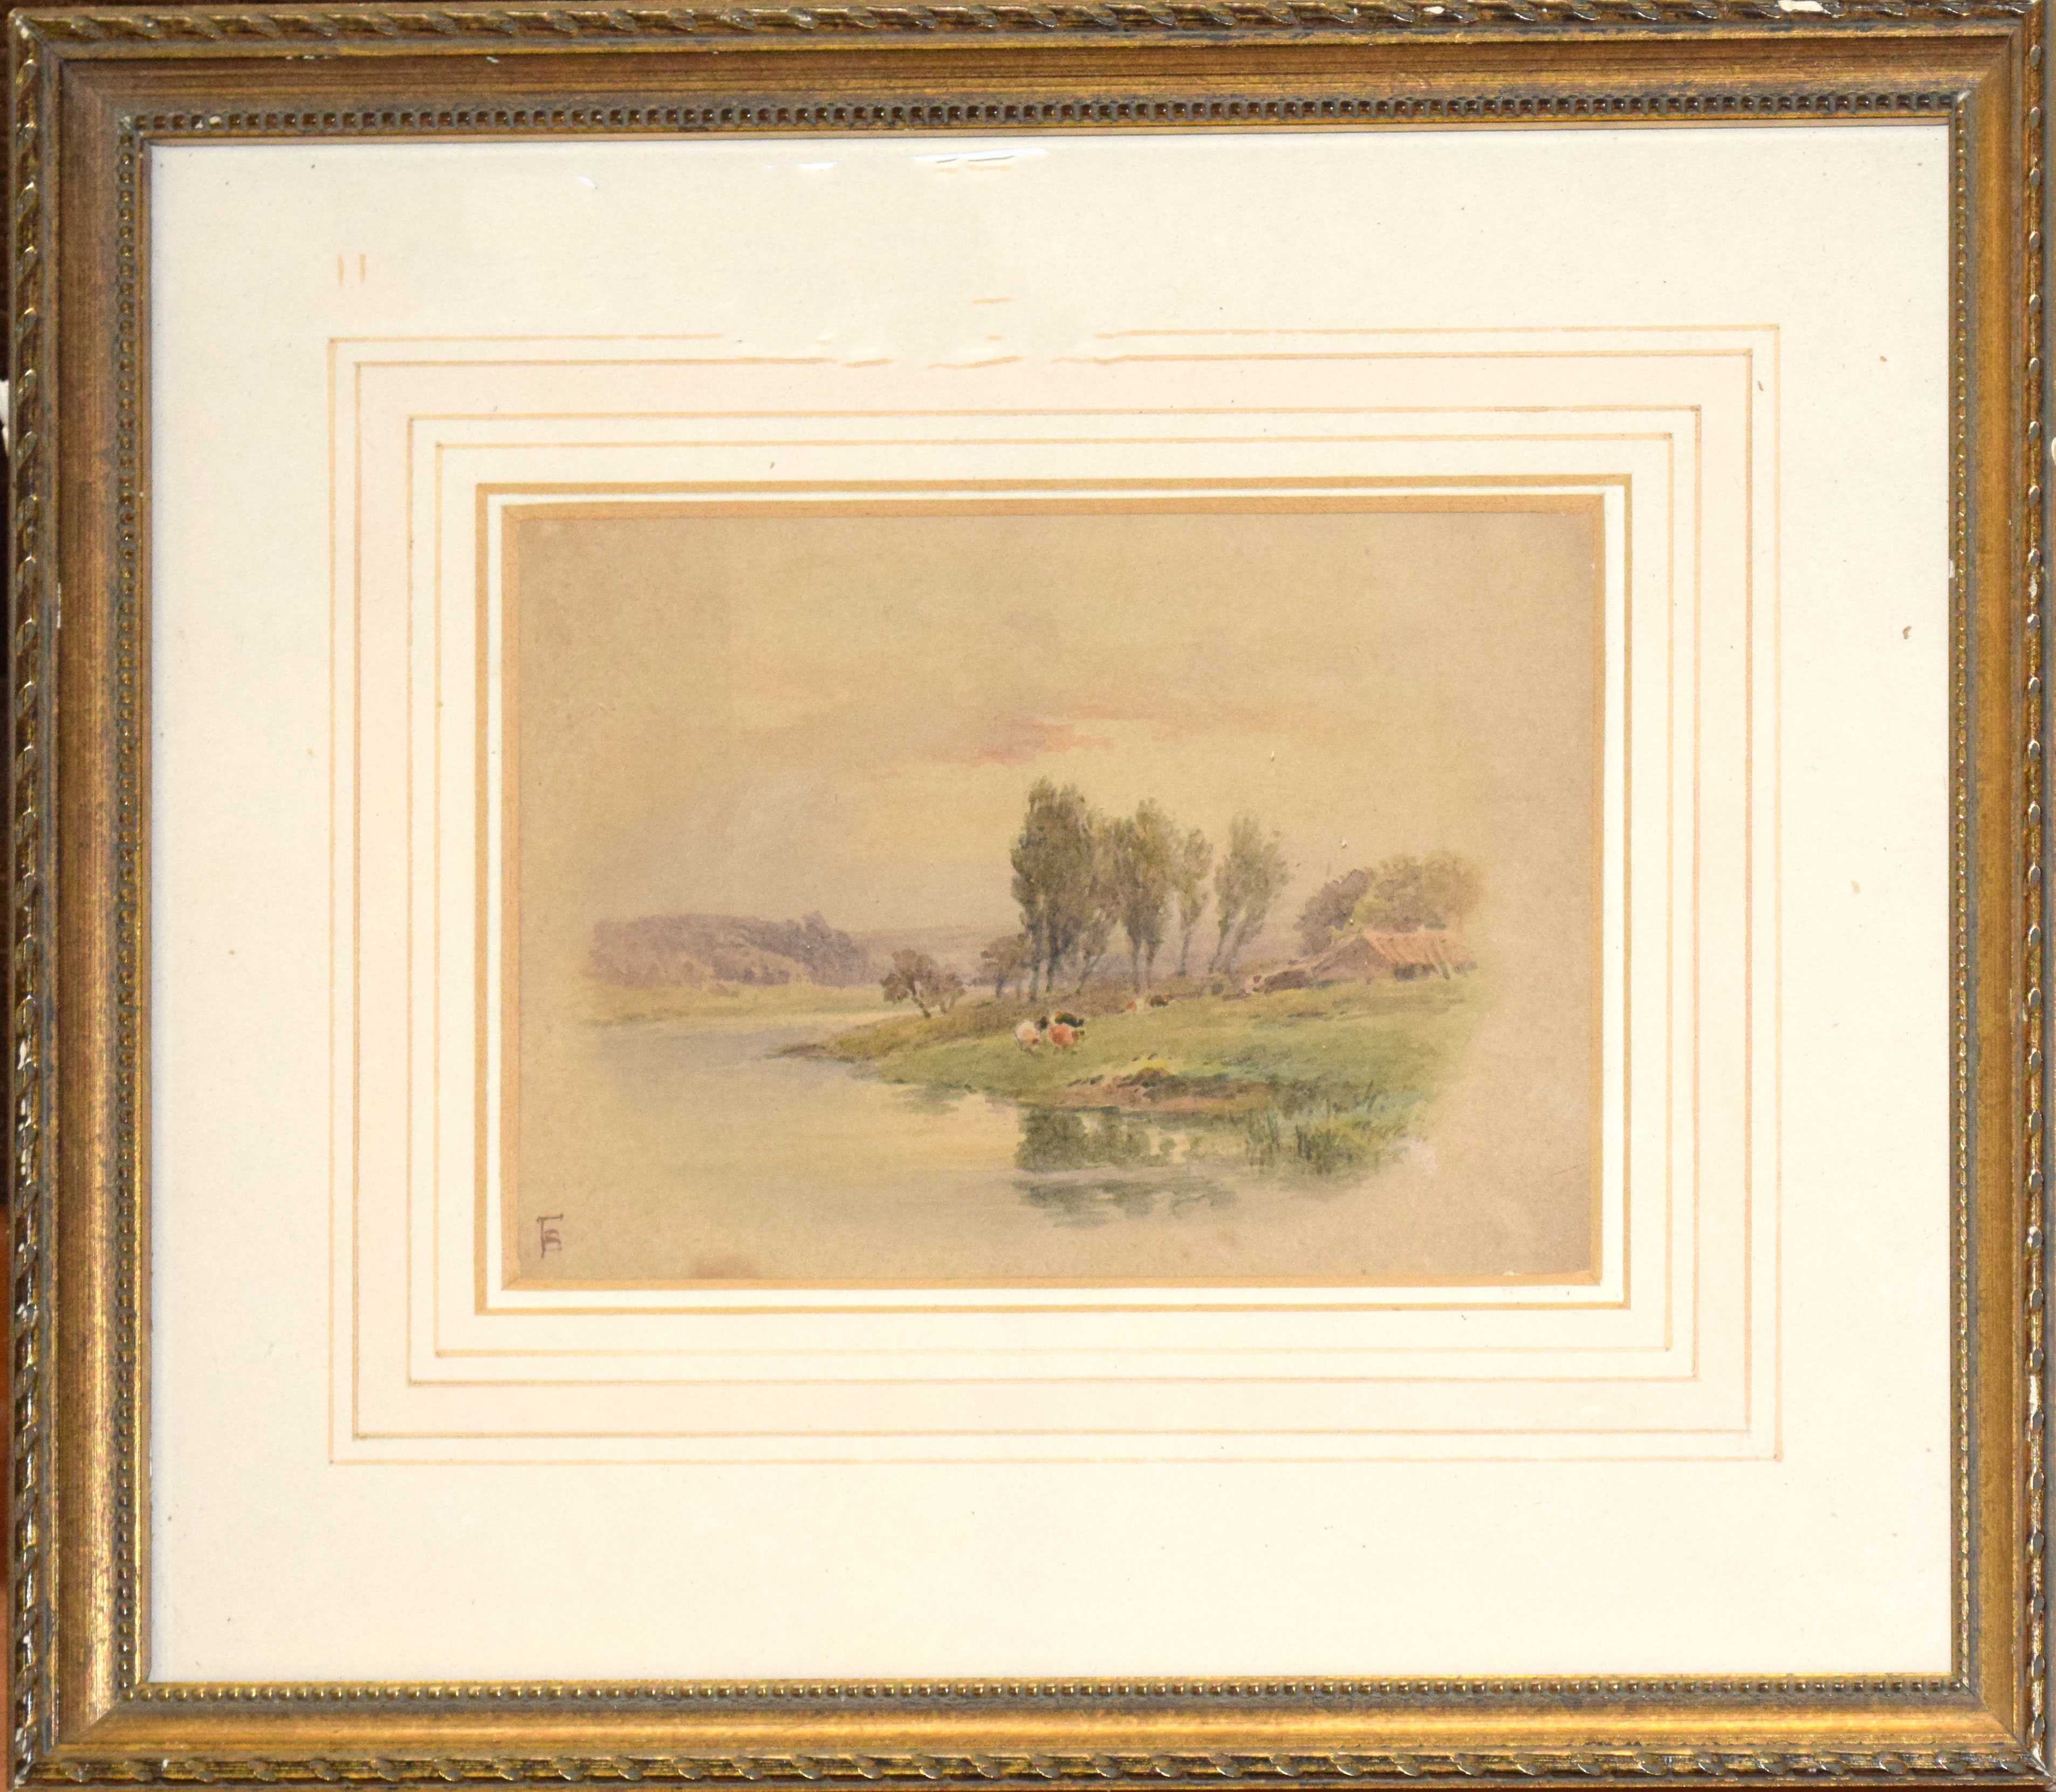 Myles Burkett Foster, River landscape, watercolour, monogrammed lower left, 9 x 13cm